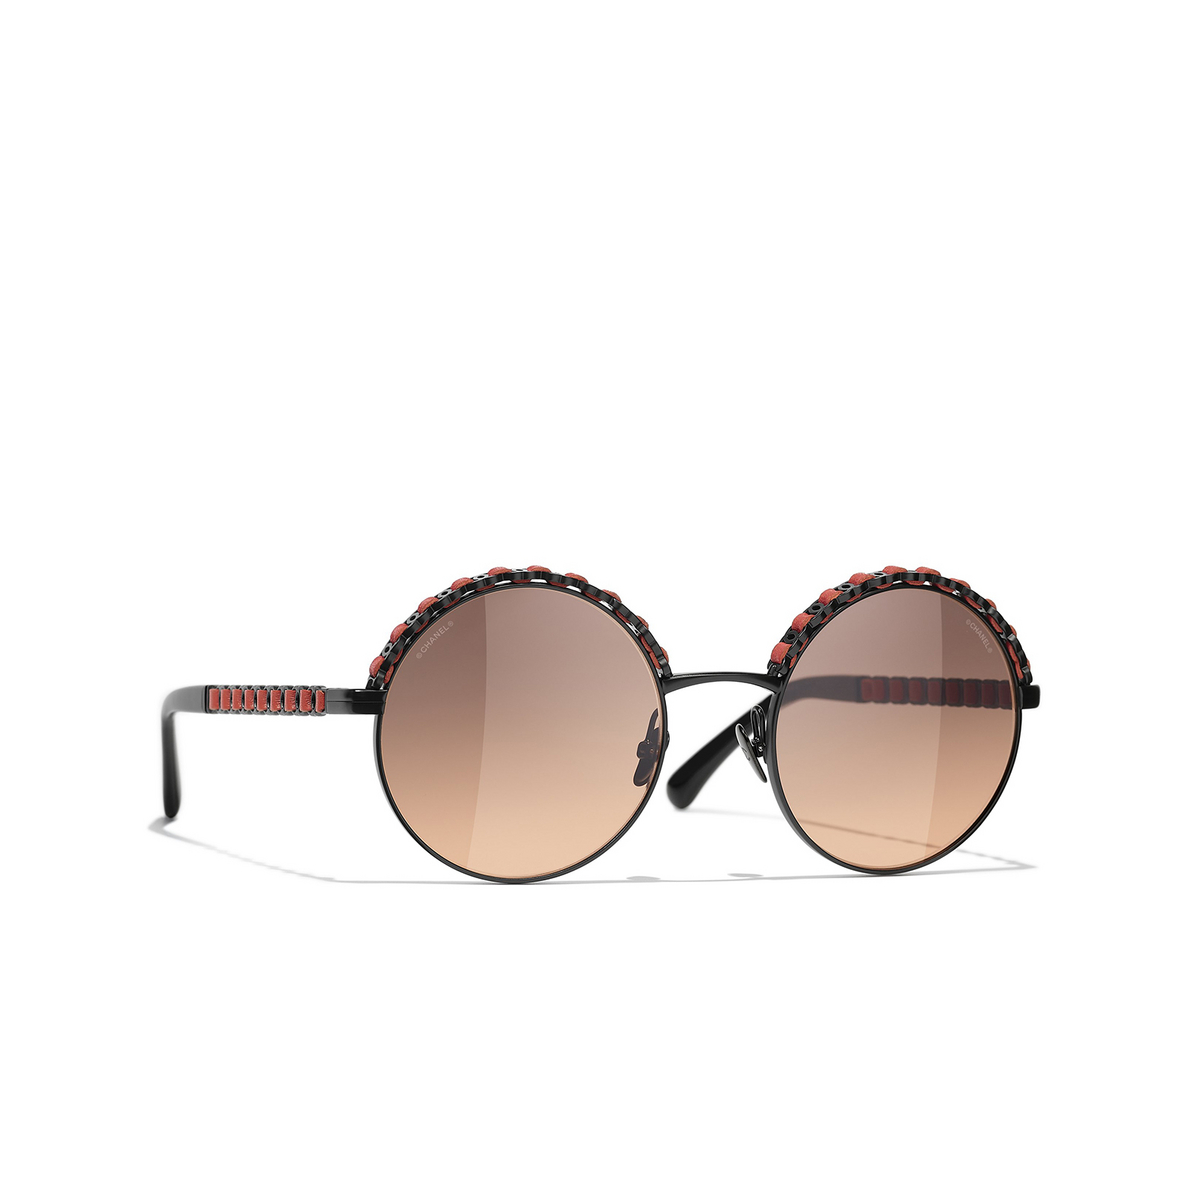 CHANEL round Sunglasses C10118 Black & Orange - three-quarters view